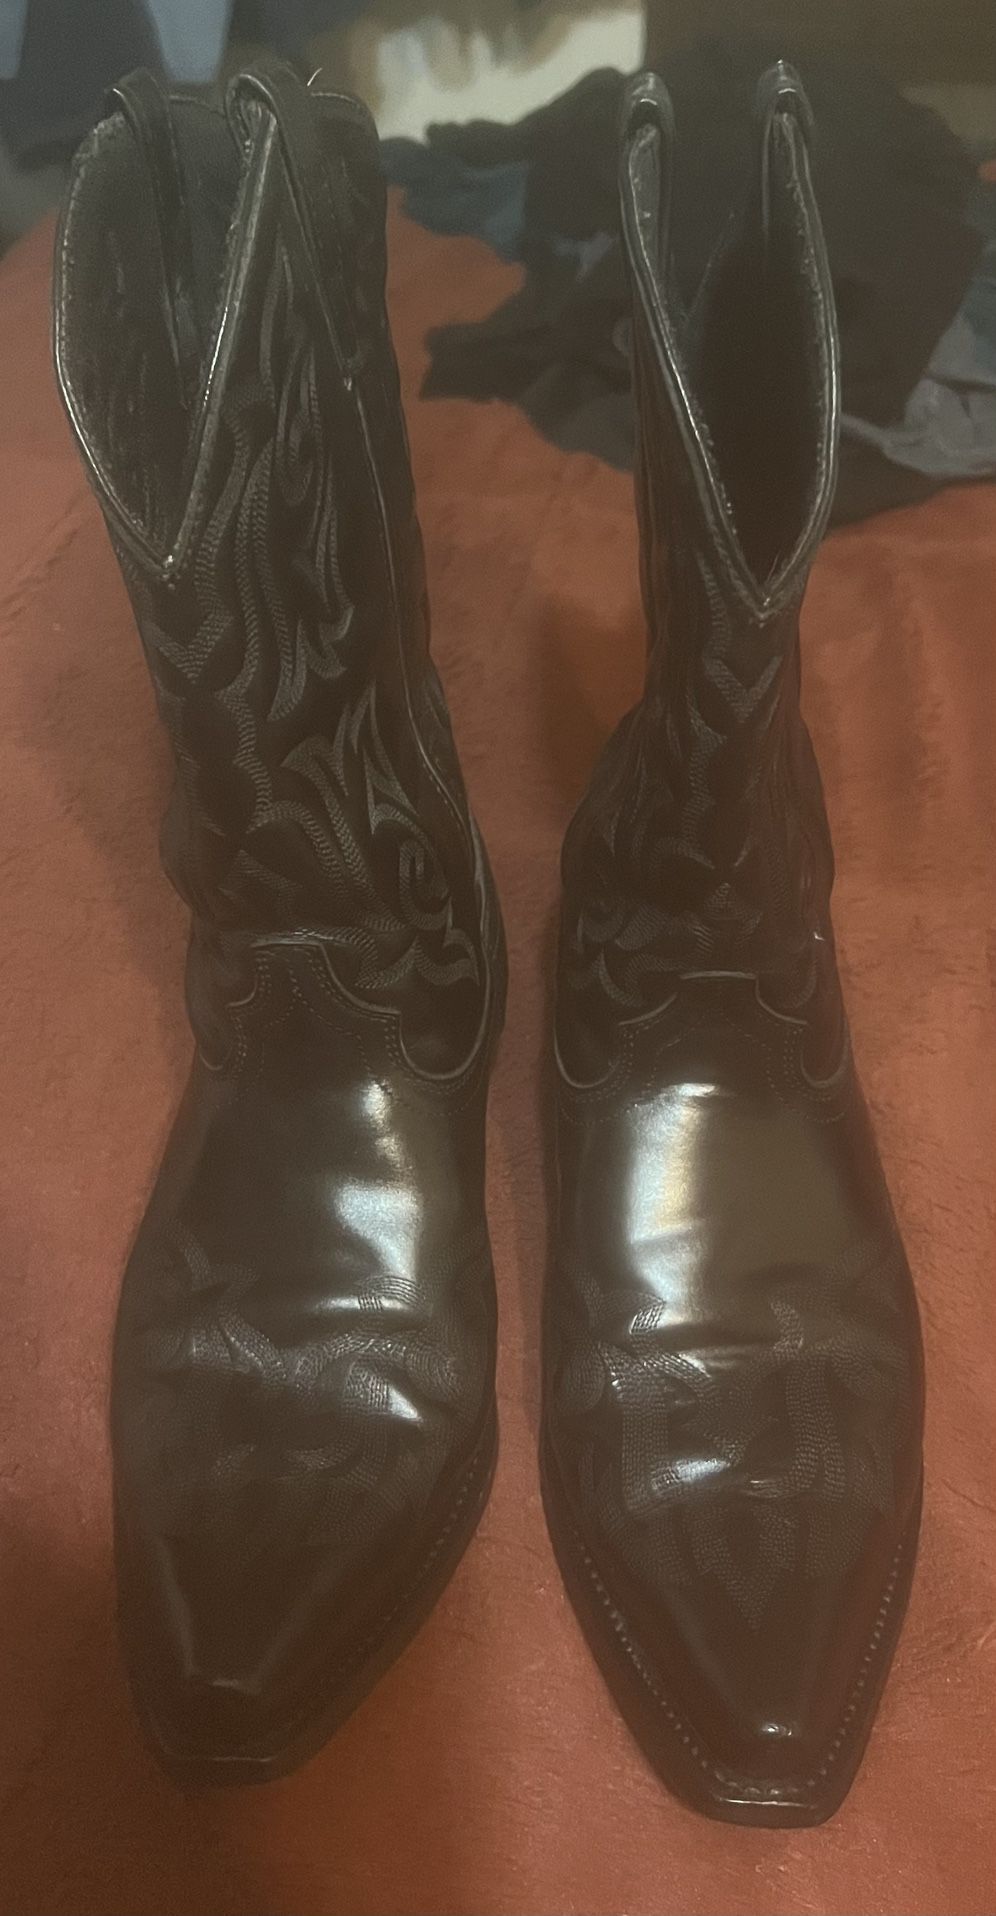 Men's Laredo Boots